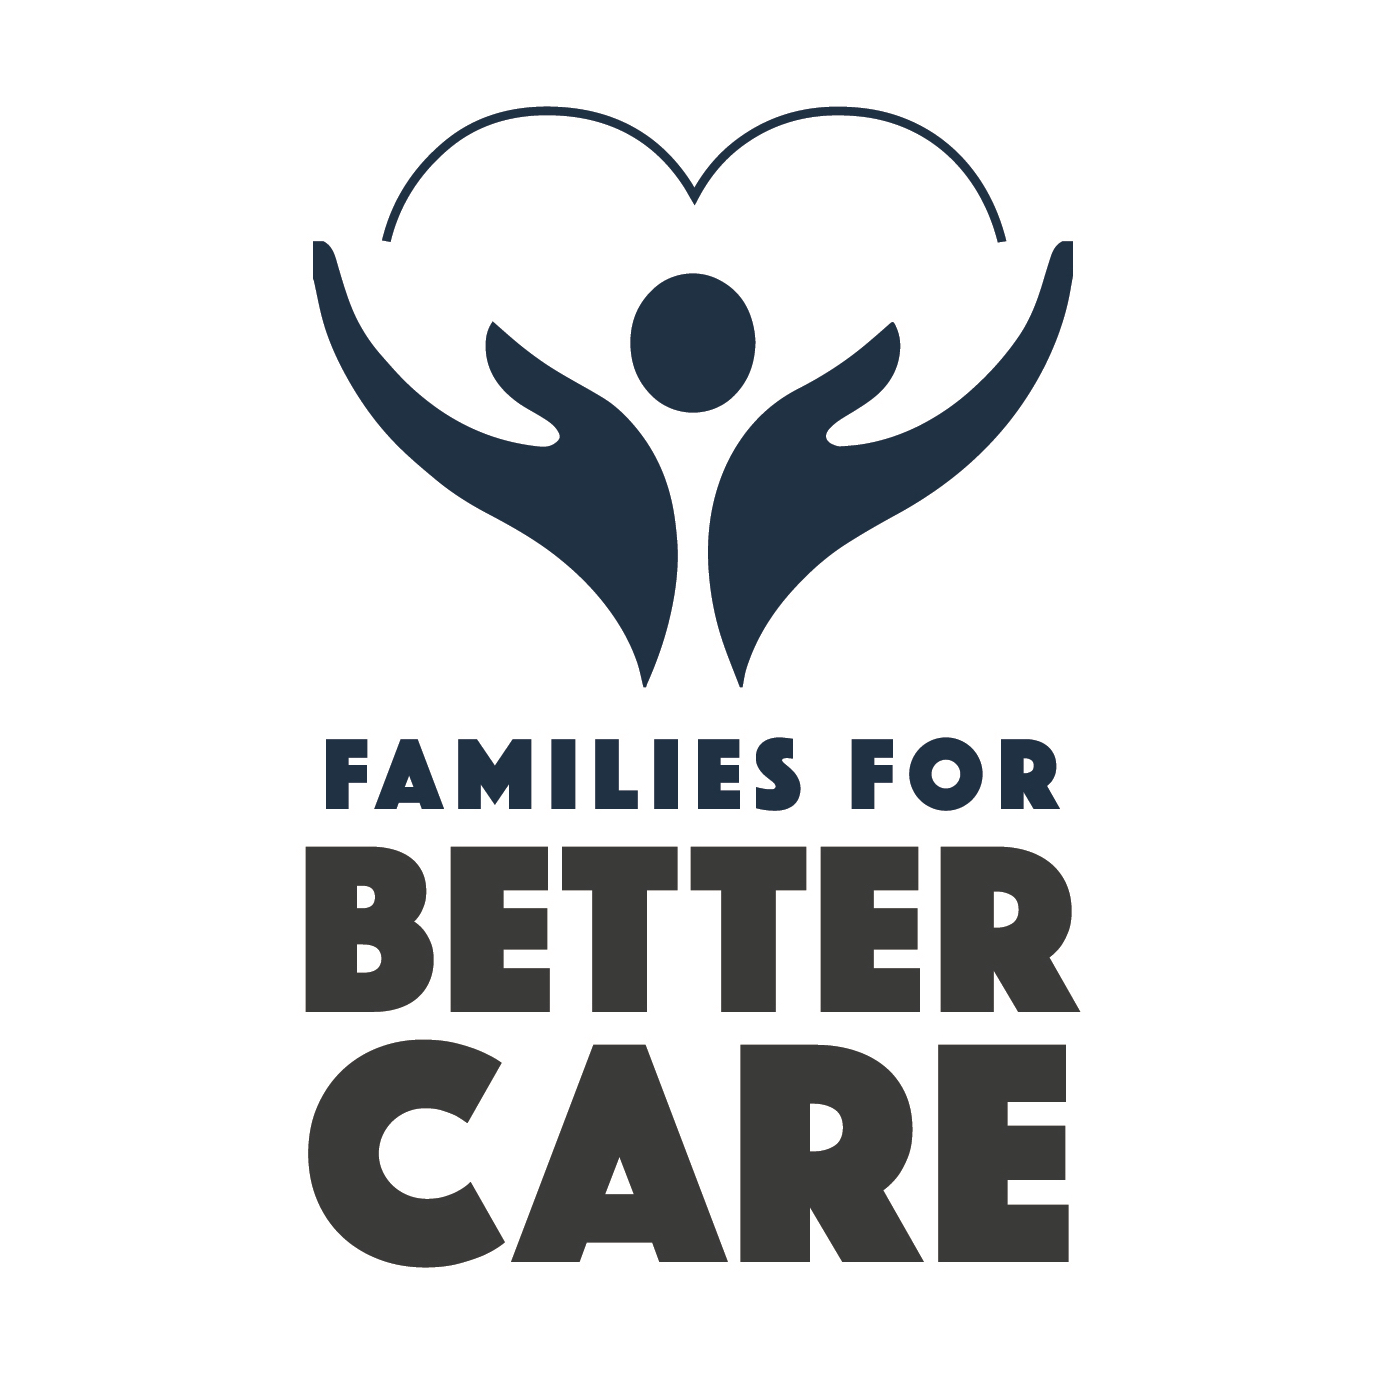 Families for Better Care Texas nursing homes Families for Better Care Brian Lee Image